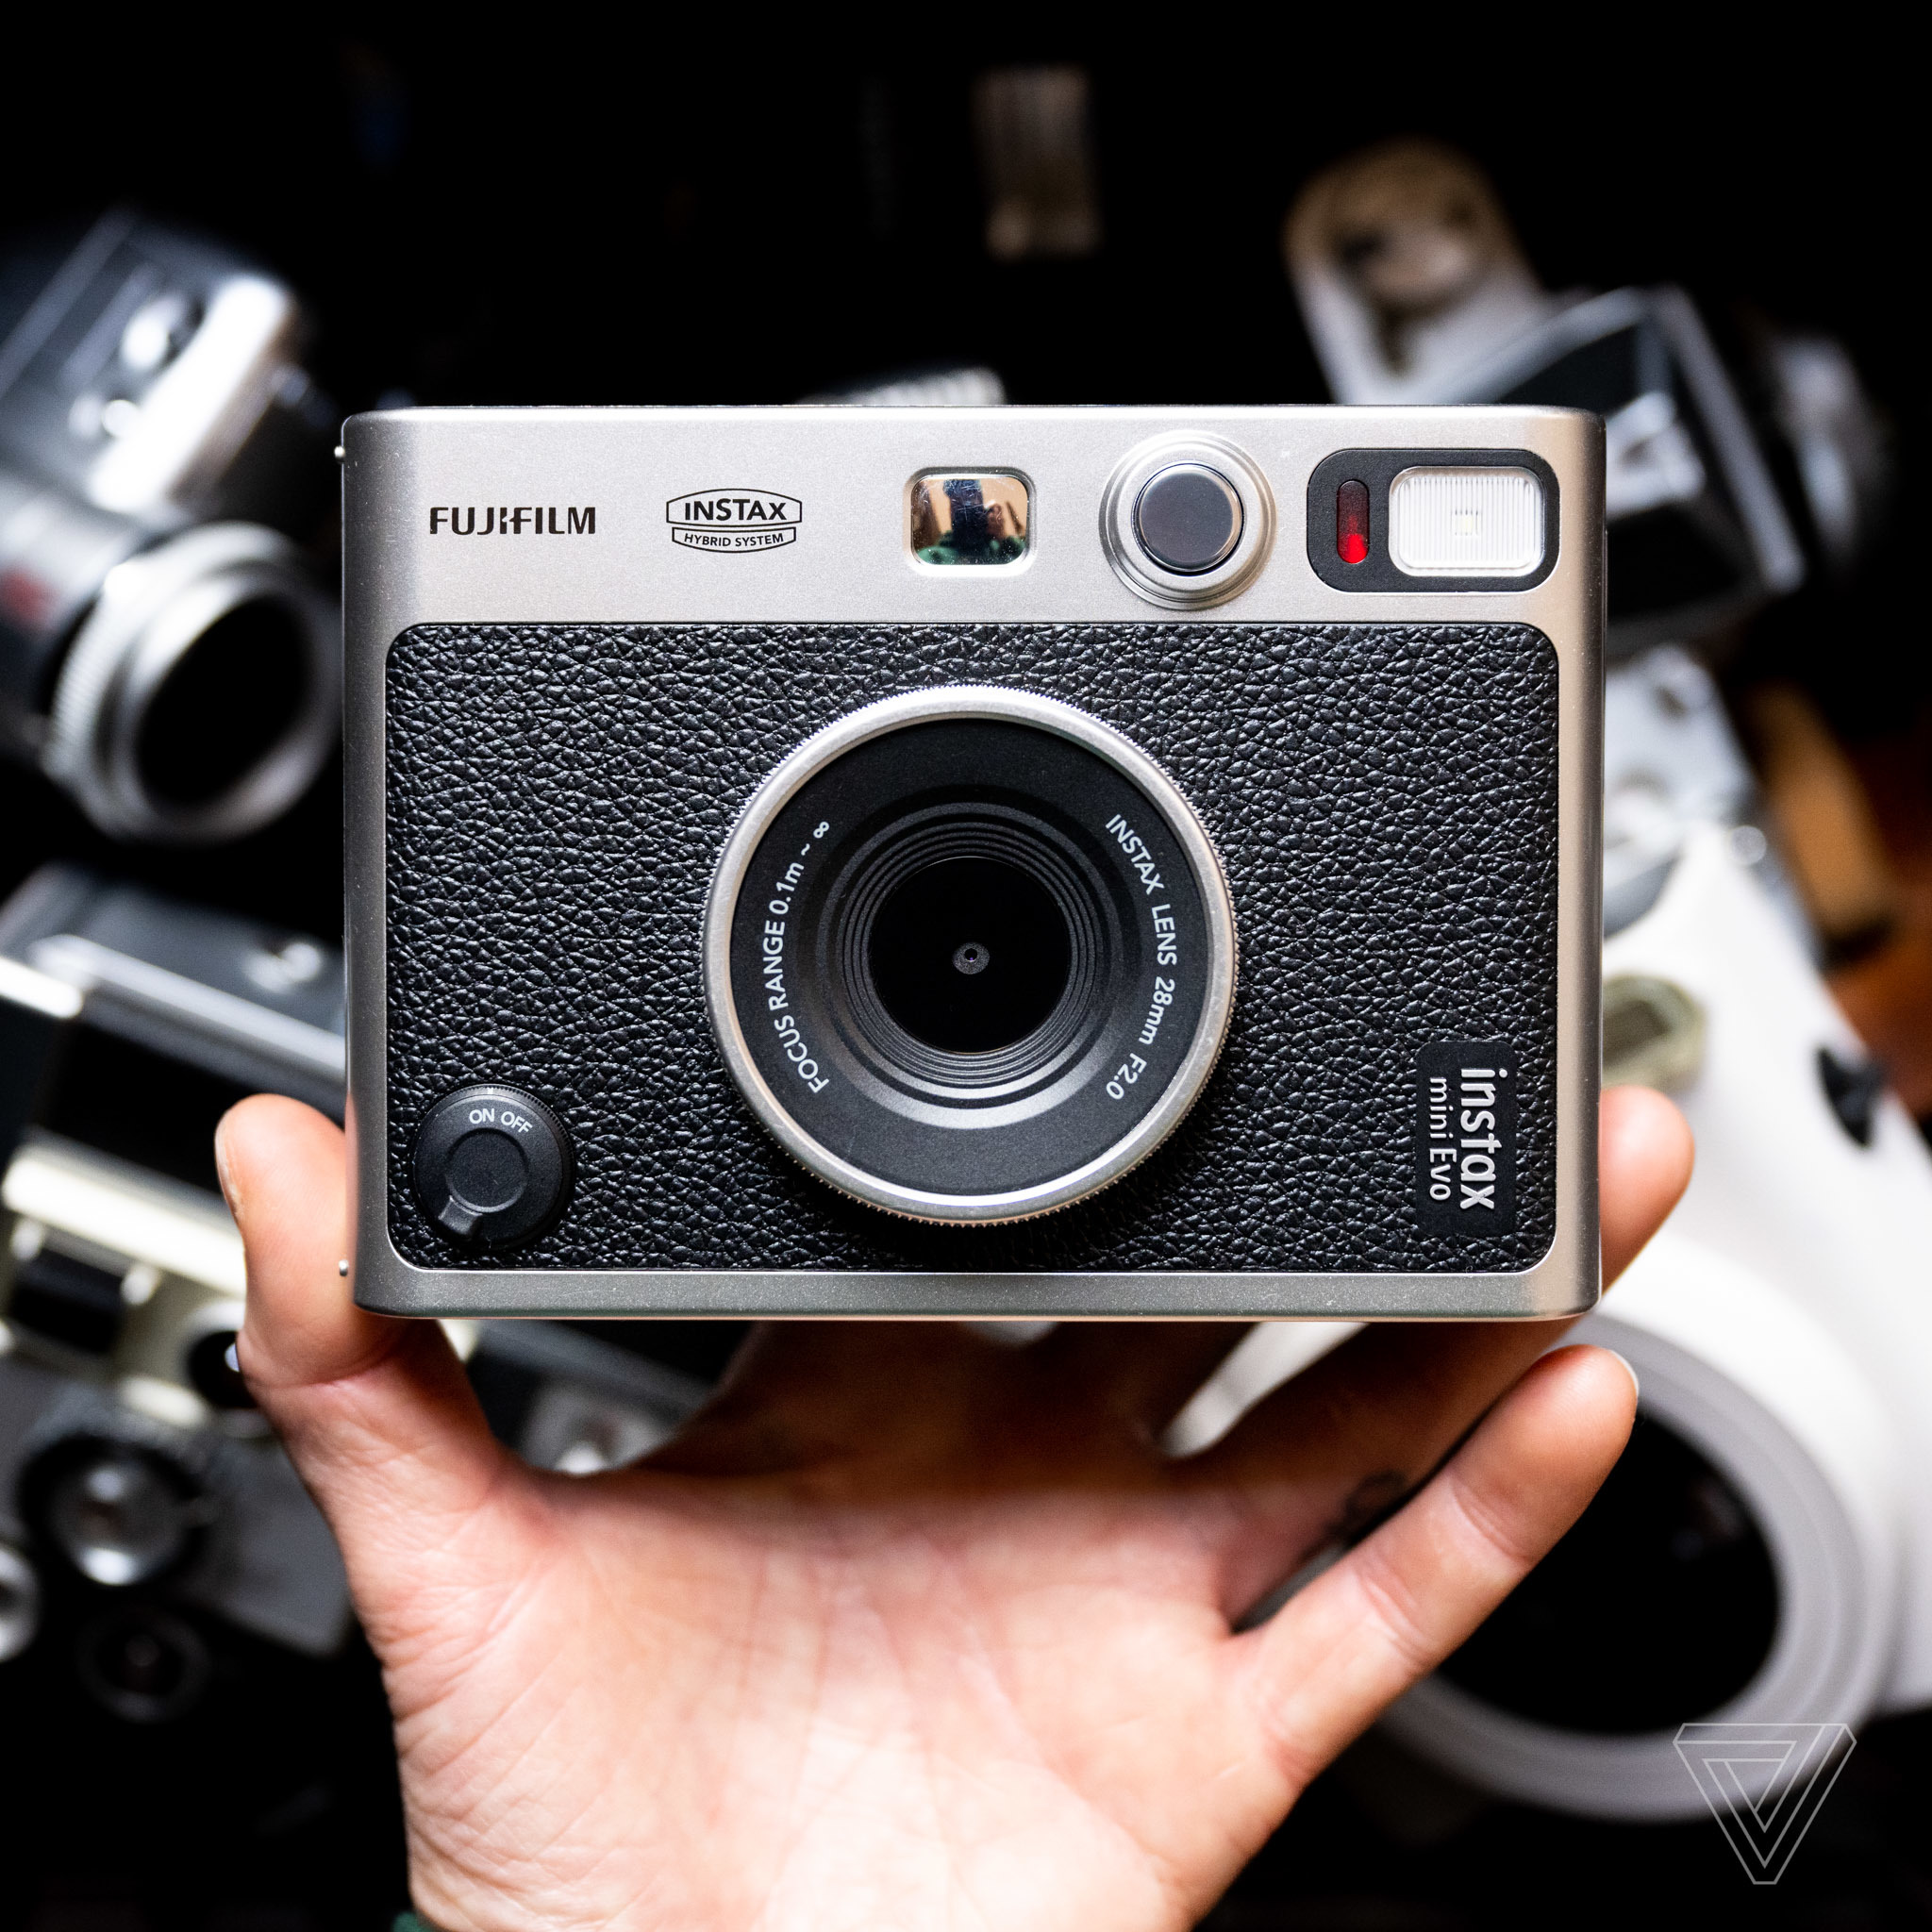 schending Harmonisch lont Fujifilm Instax Mini Evo review: more camera than toy - The Verge